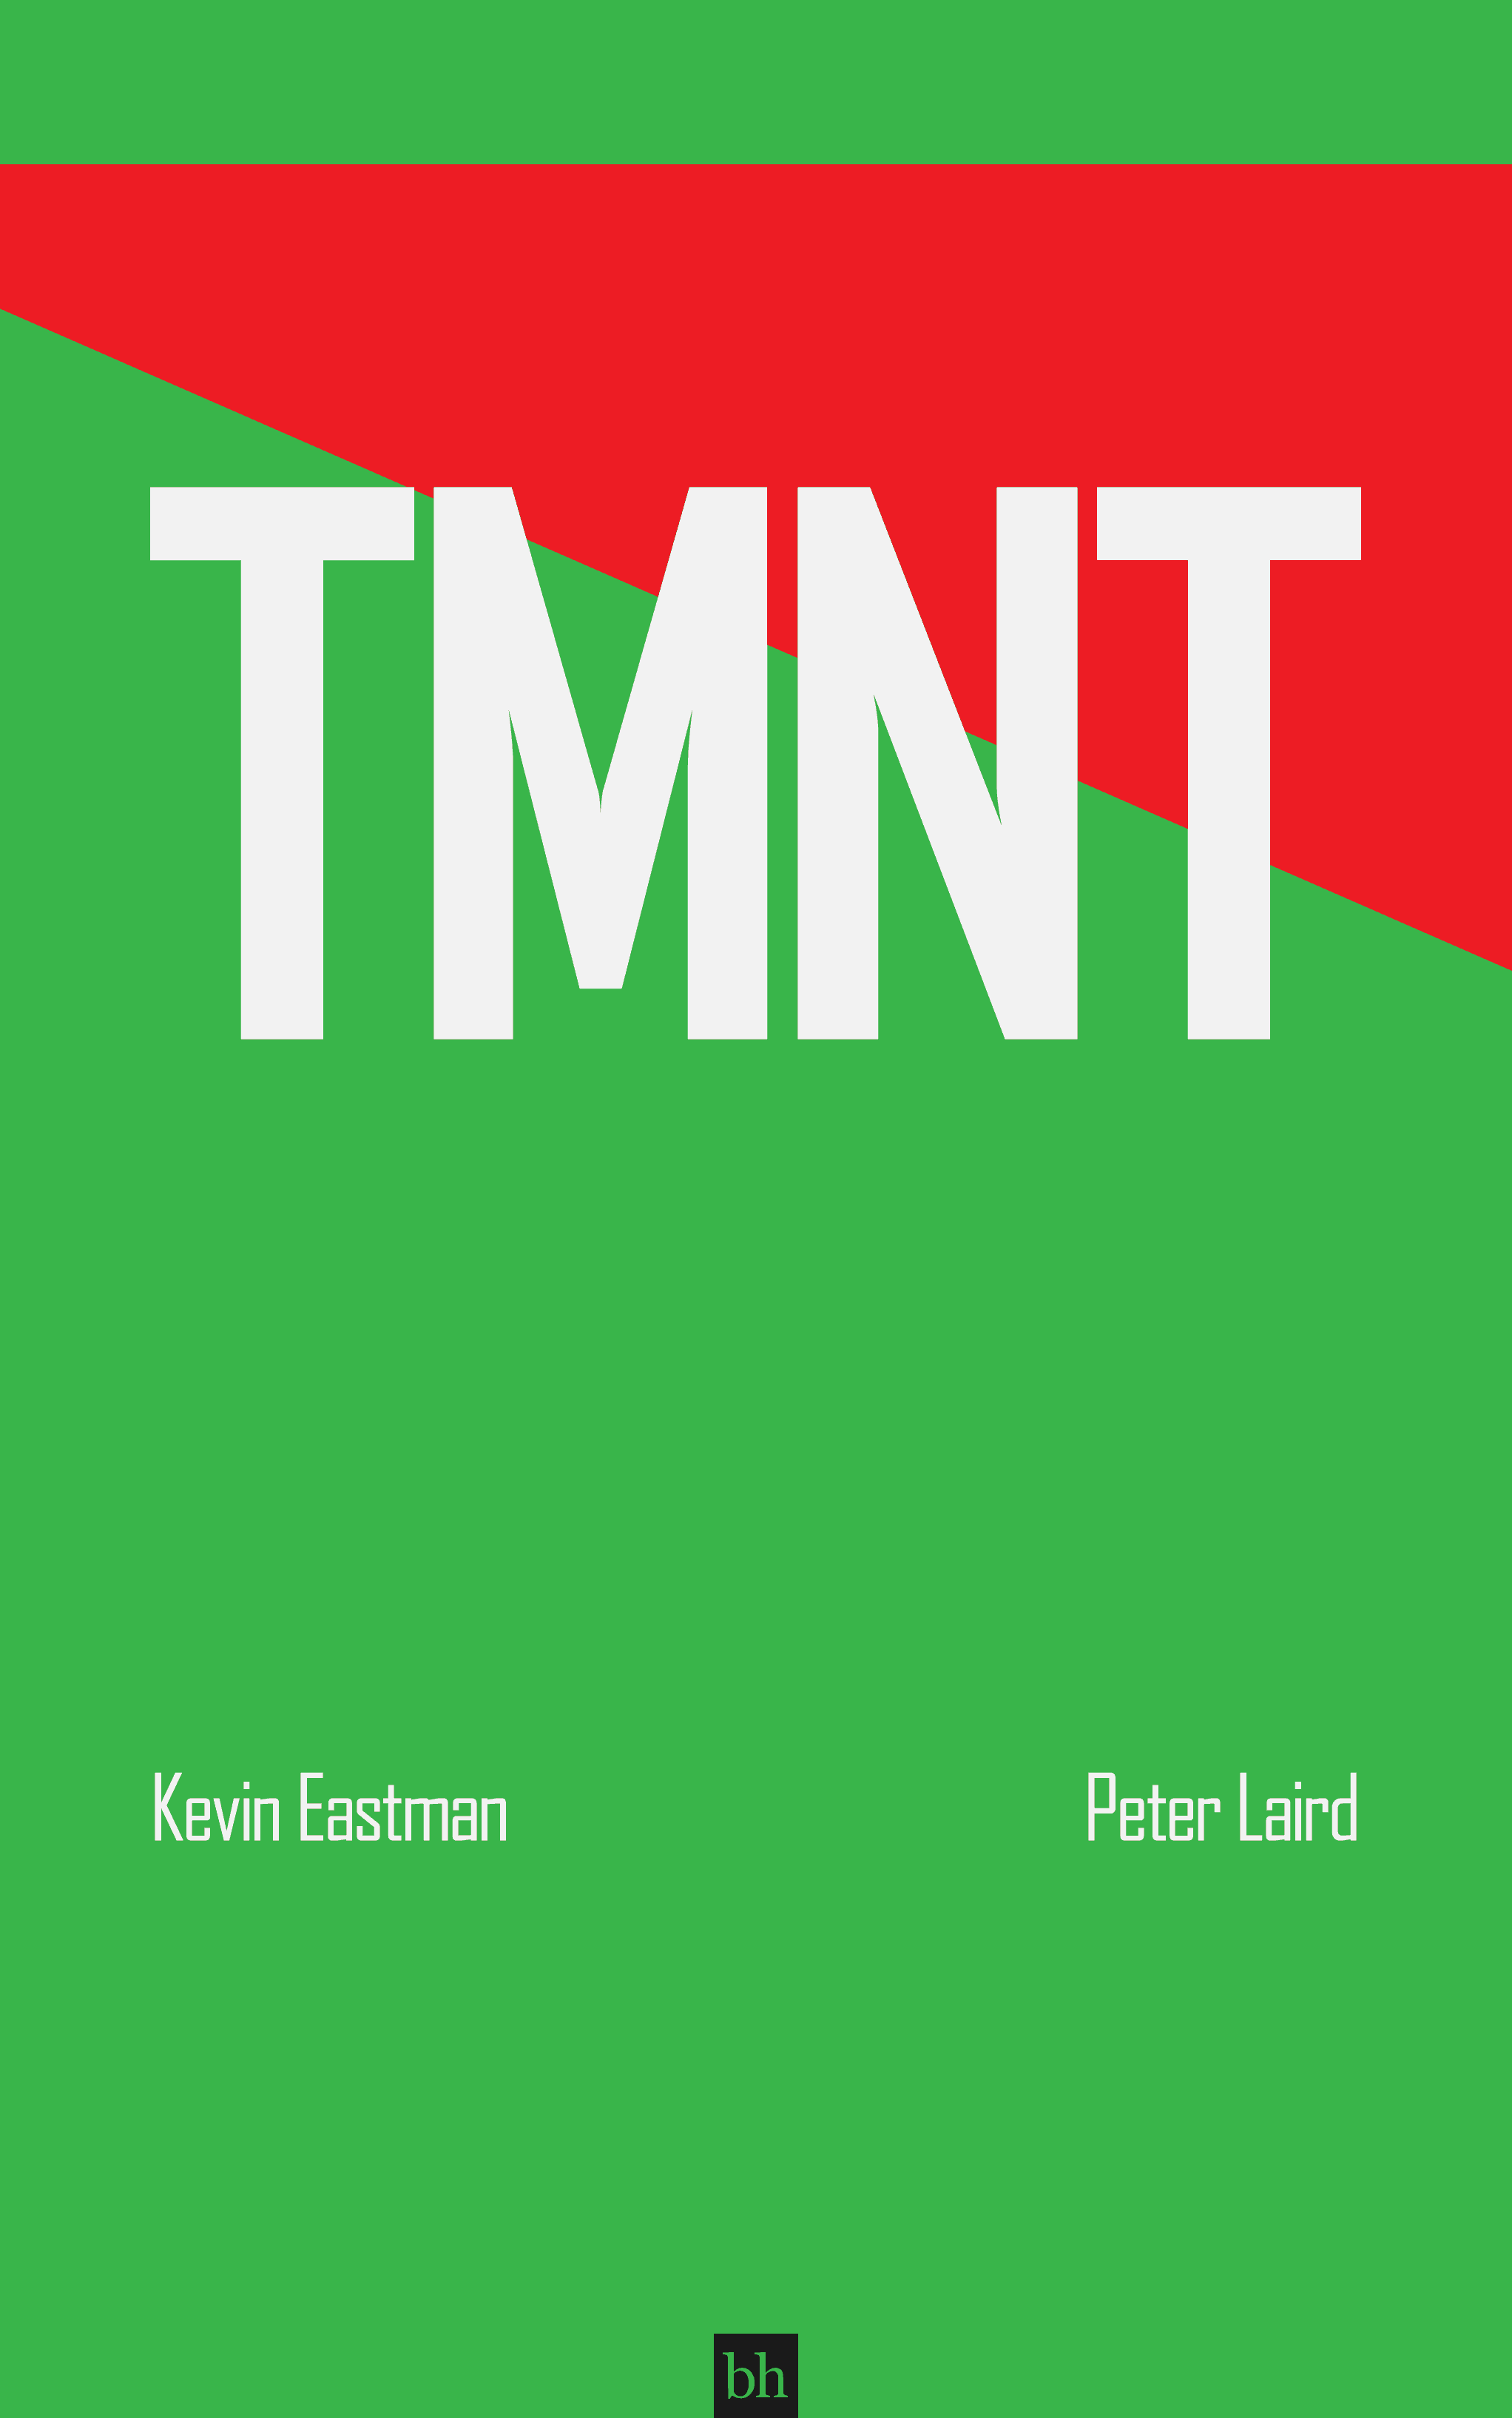 Book cover mock thumbnail for Teenage Mutant Ninja Turtles